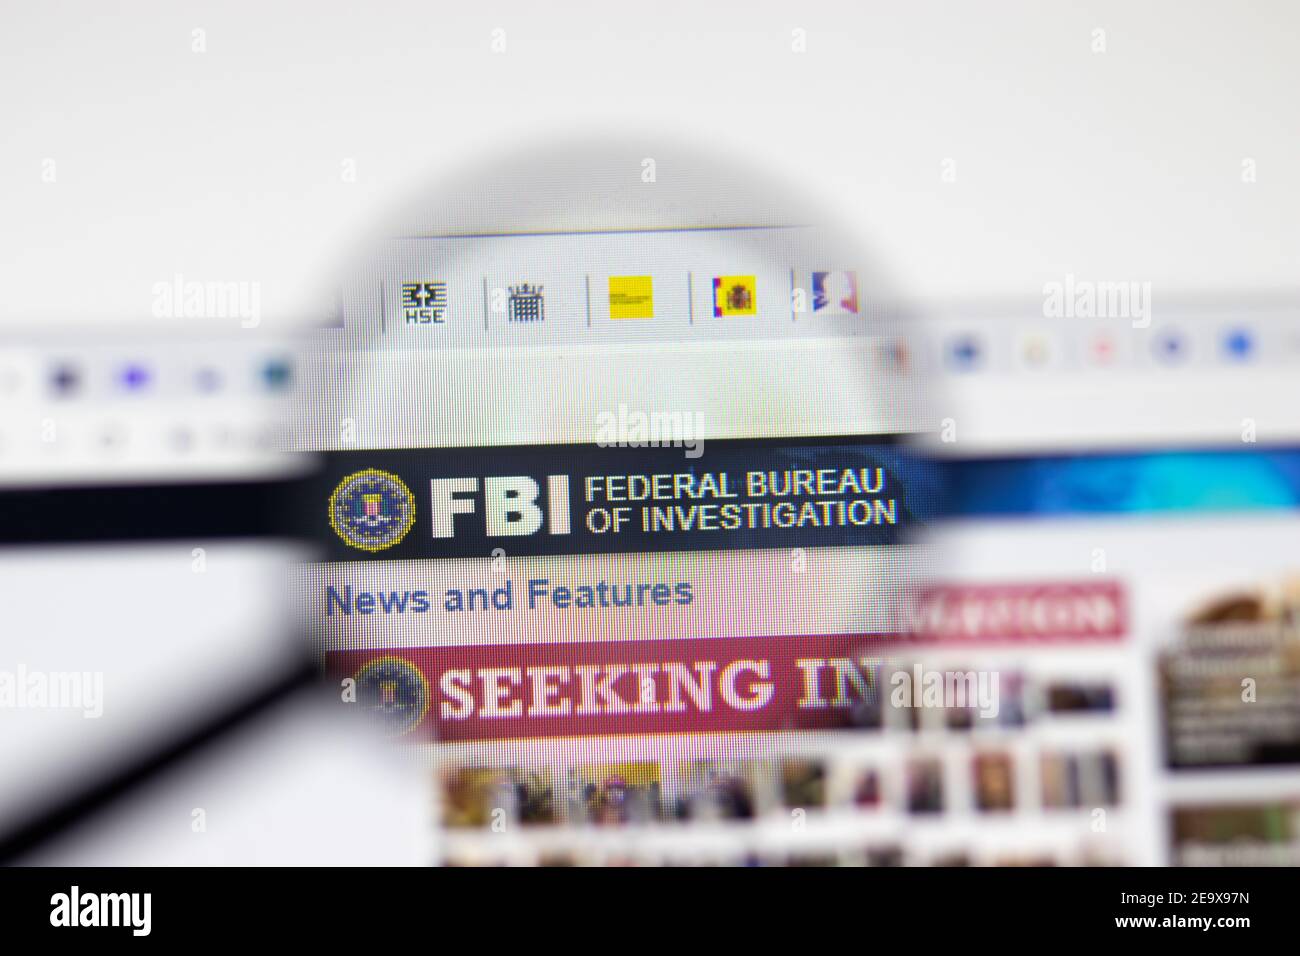 Los Angeles, Etats-Unis - 1er février 2021 : page du site Web du FBI Federal Bureau of Investigation. Fbi.gov logo sur l'écran, illustration Editorial Banque D'Images